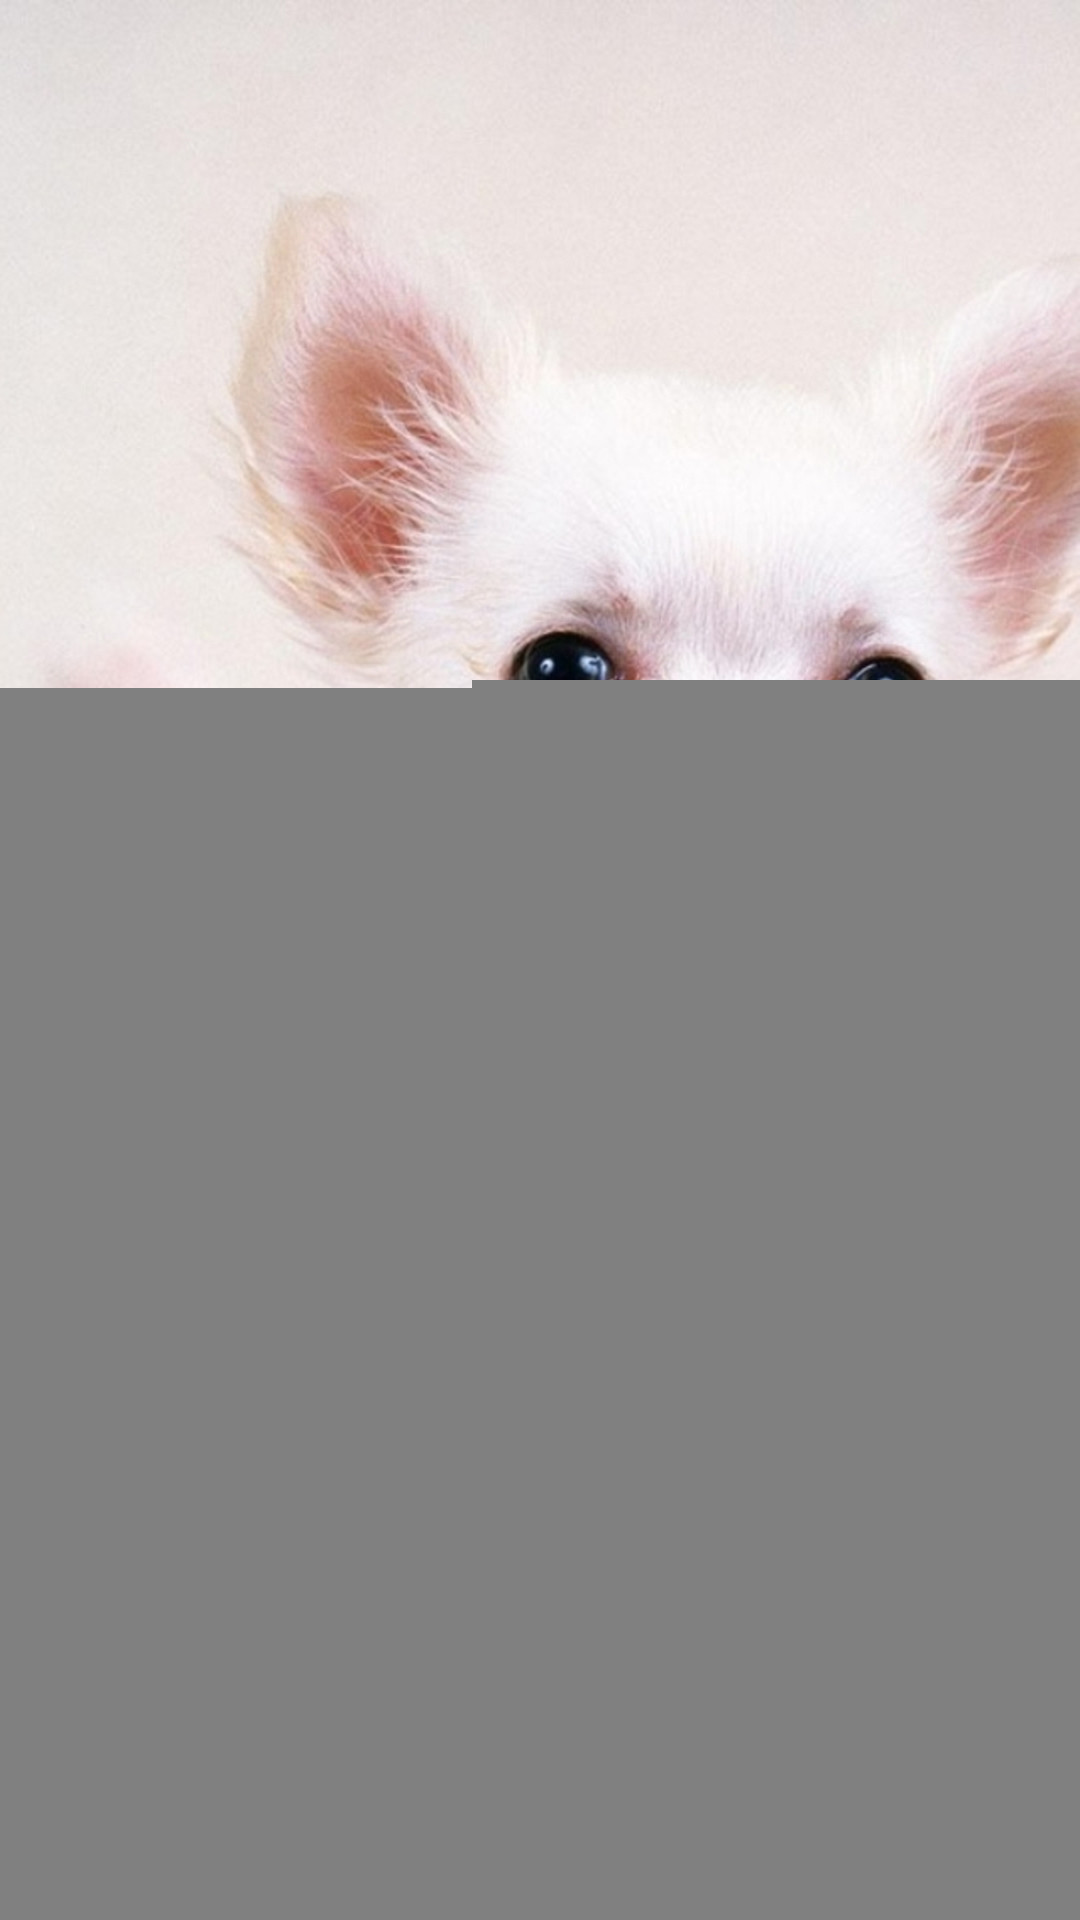 1080x1920 Cute Pretty Dog In Red Sweater iPhone 8 wallpaper